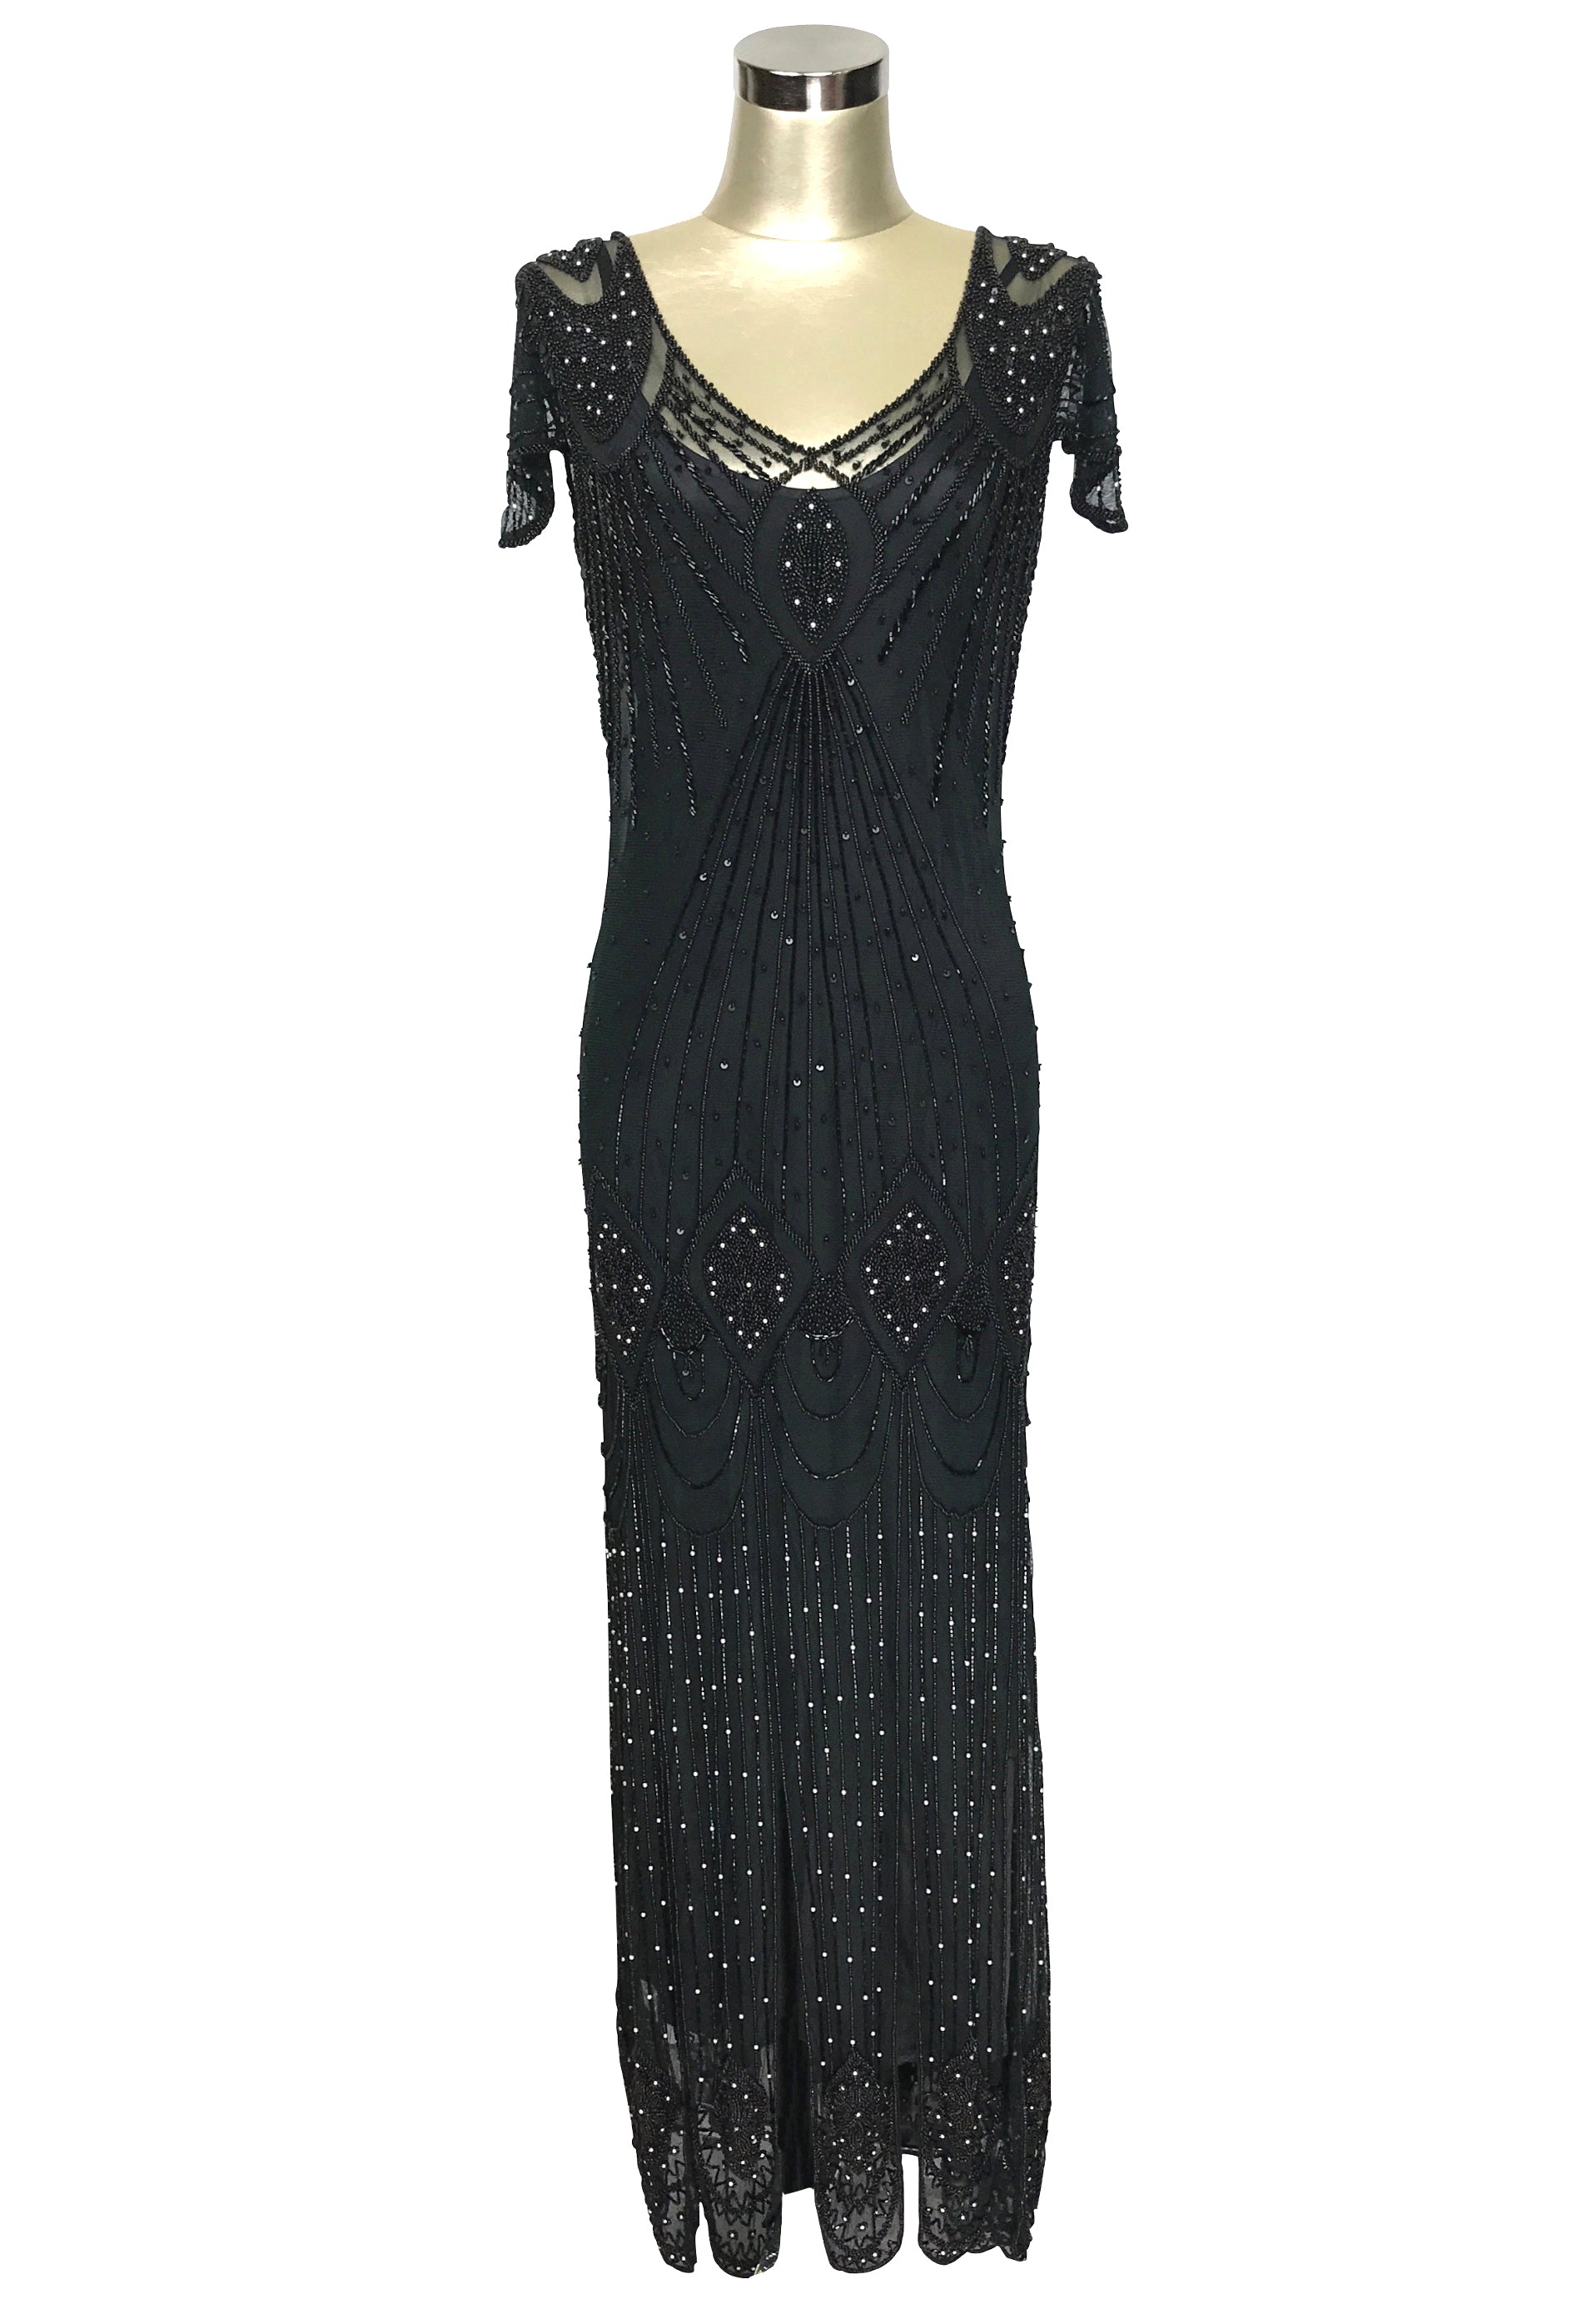 1920's Gatsby Flutter Sleeve Beaded Party Dress - The Starlet - Full-L